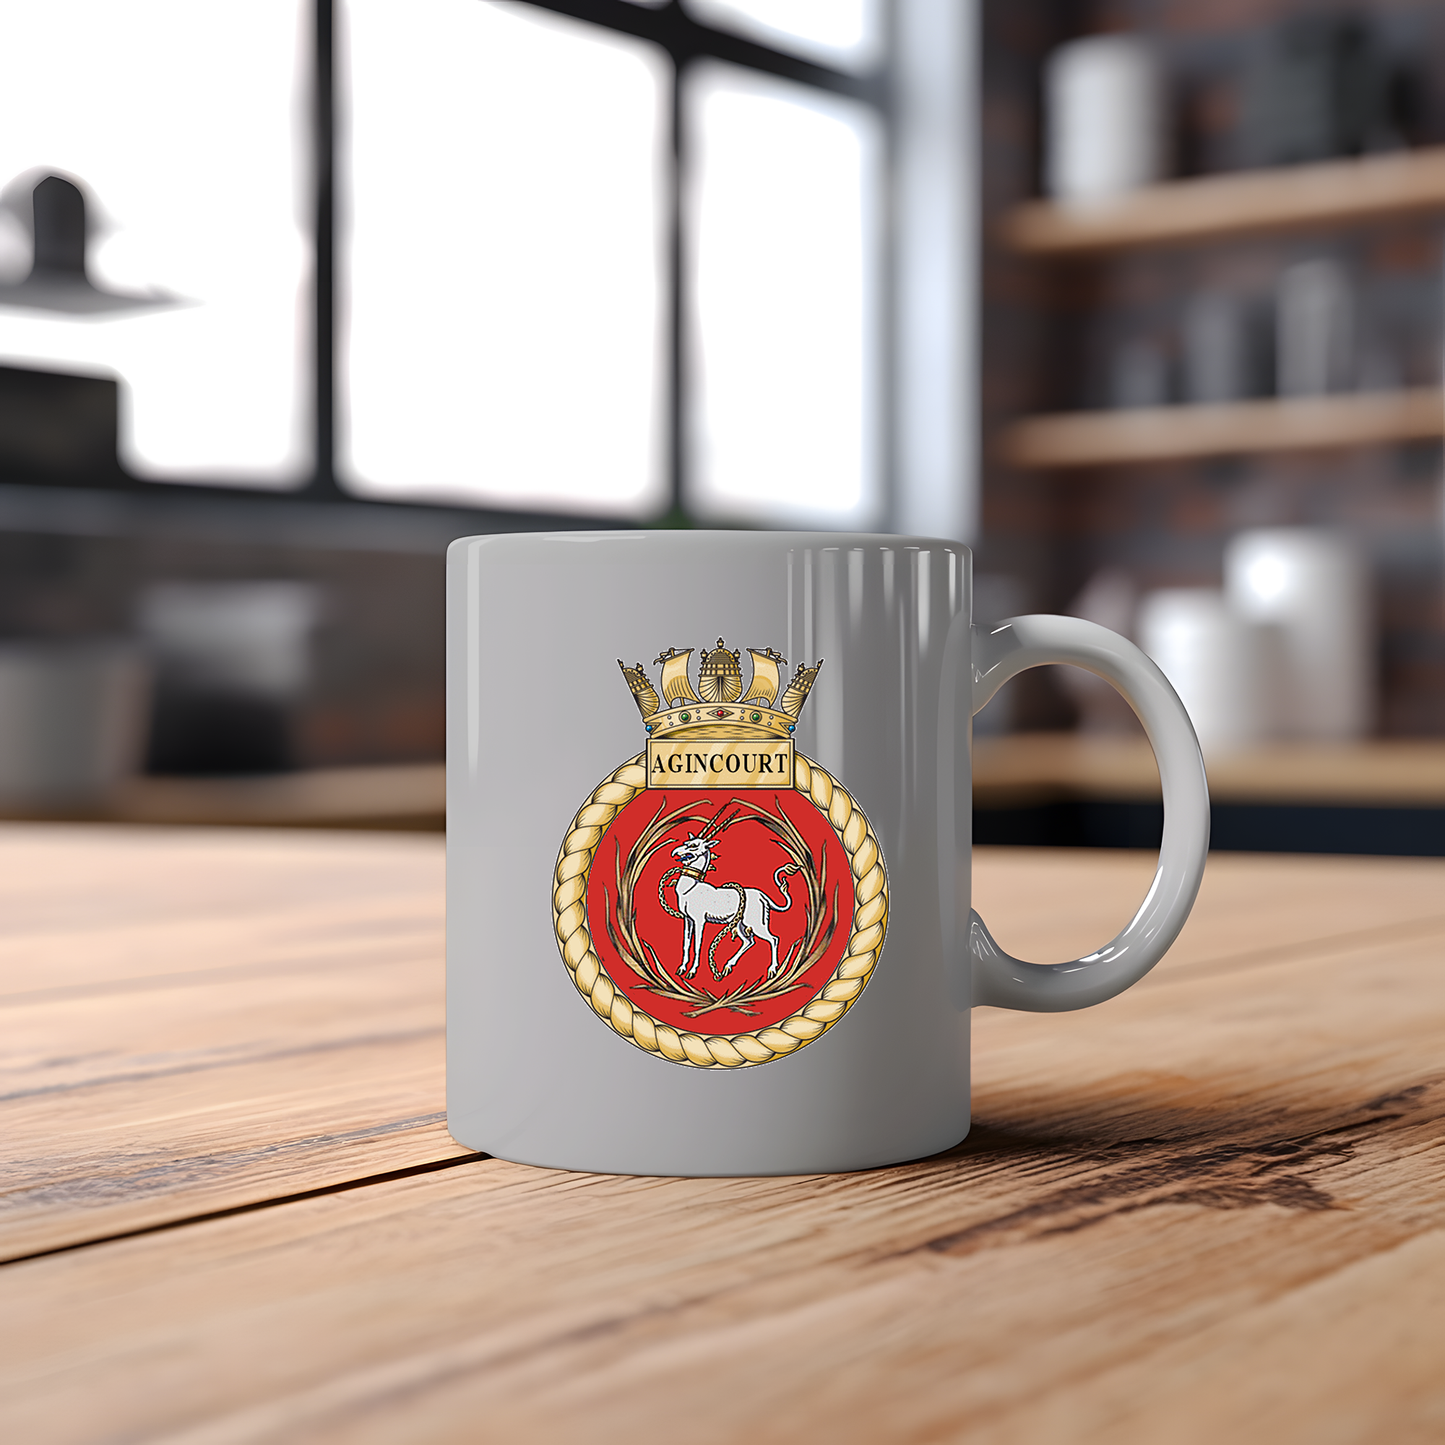 Royal Navy Submariner Crest Mug (All Crests)